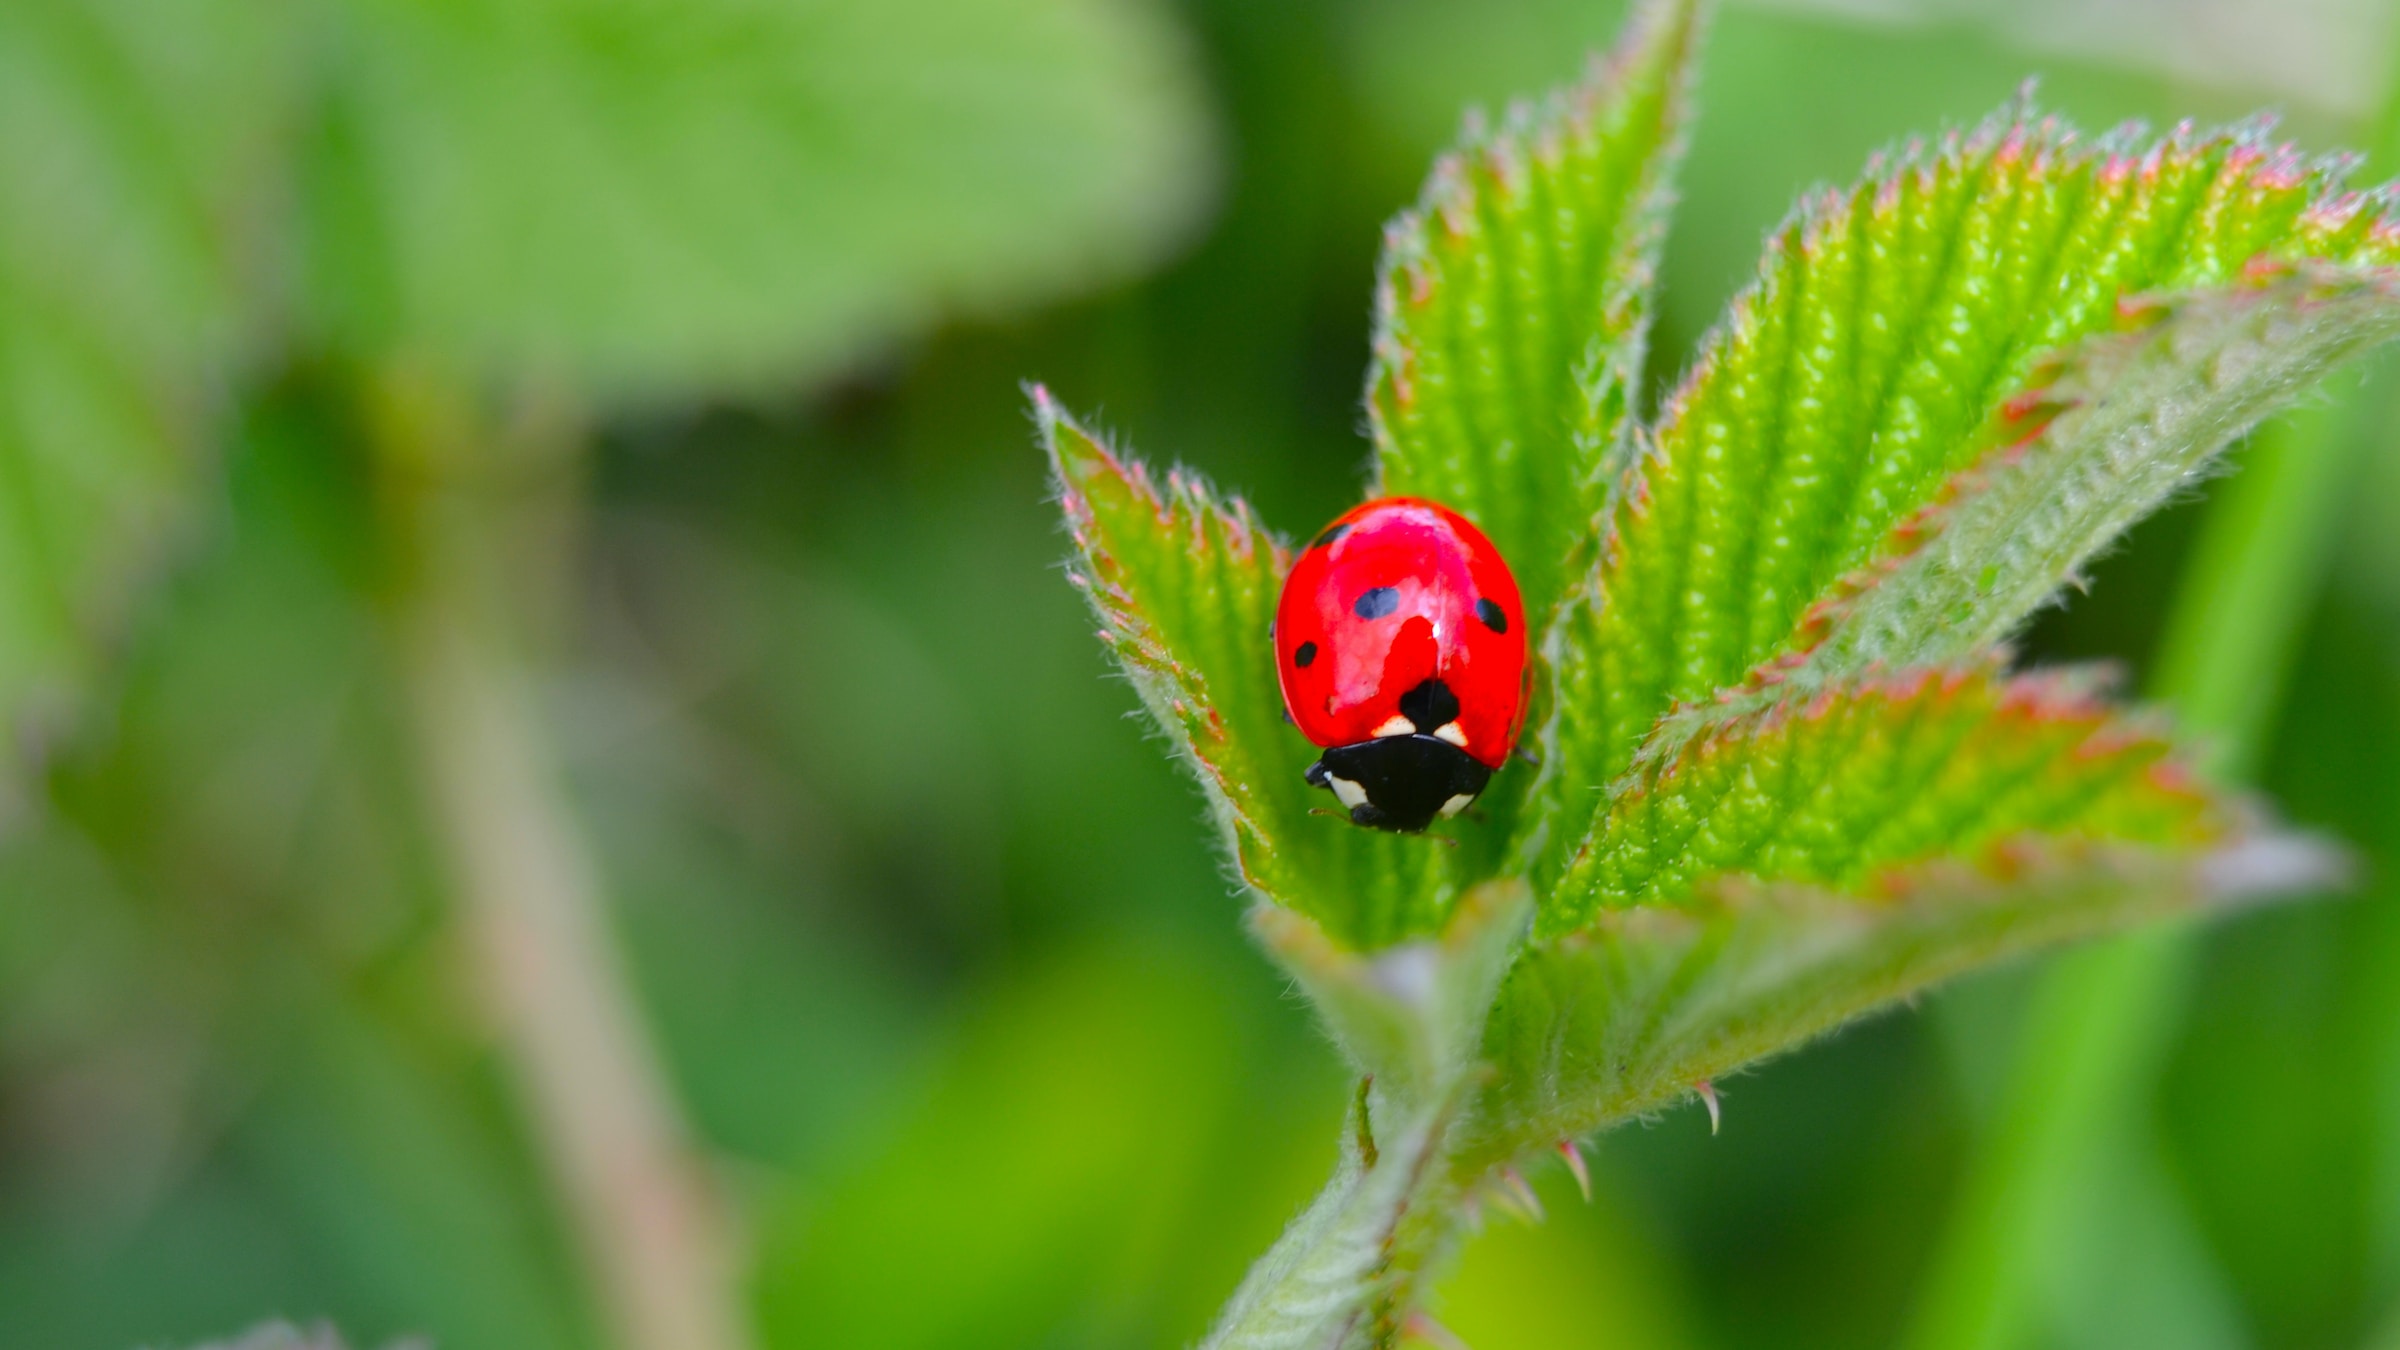 Ladybug on a Leaf from Unsplash.com